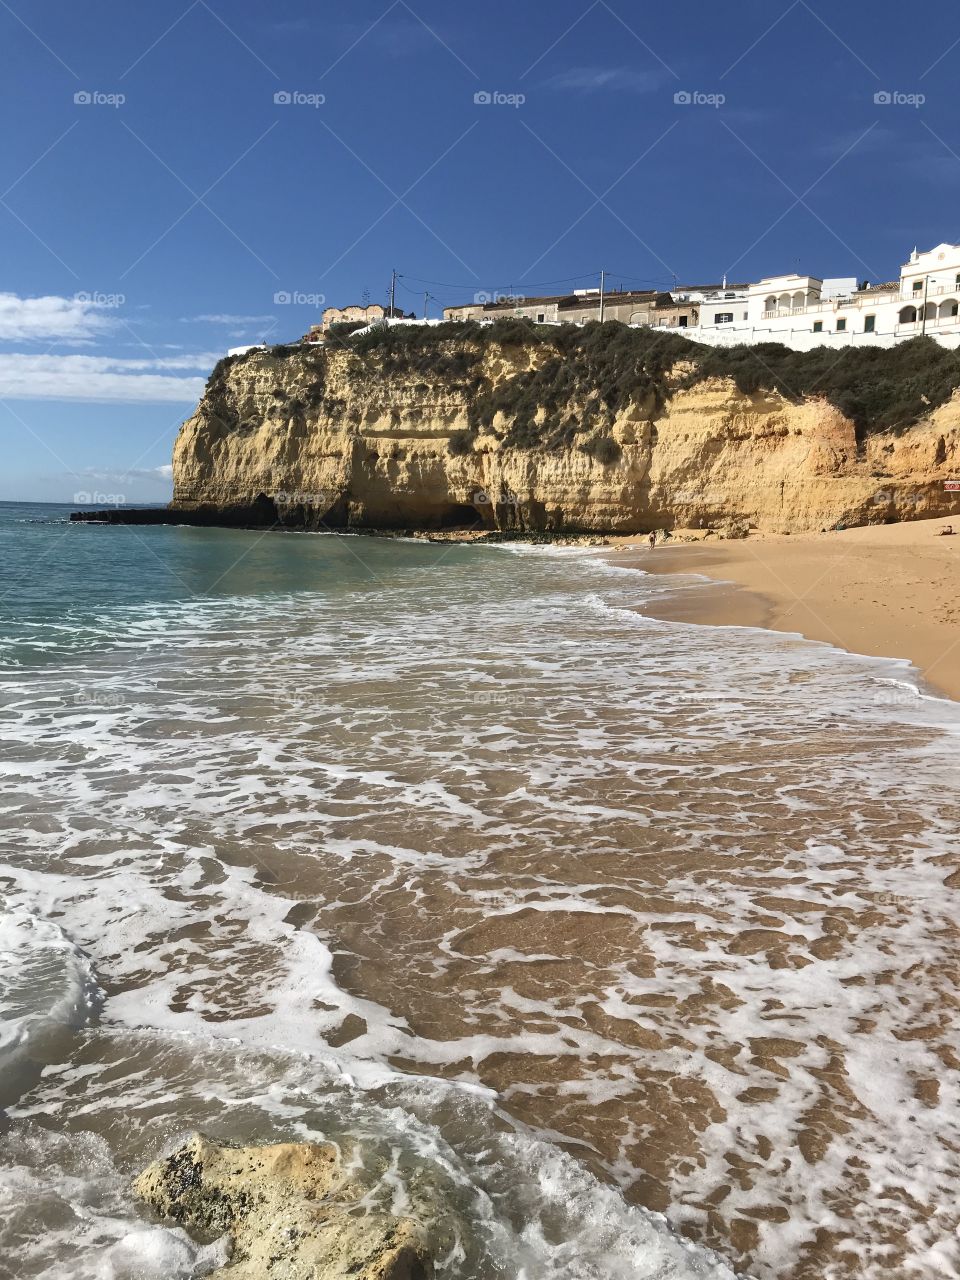 The Algarve. The Atlantic Ocean. The Blue Skies. The Rugged Coastline. 